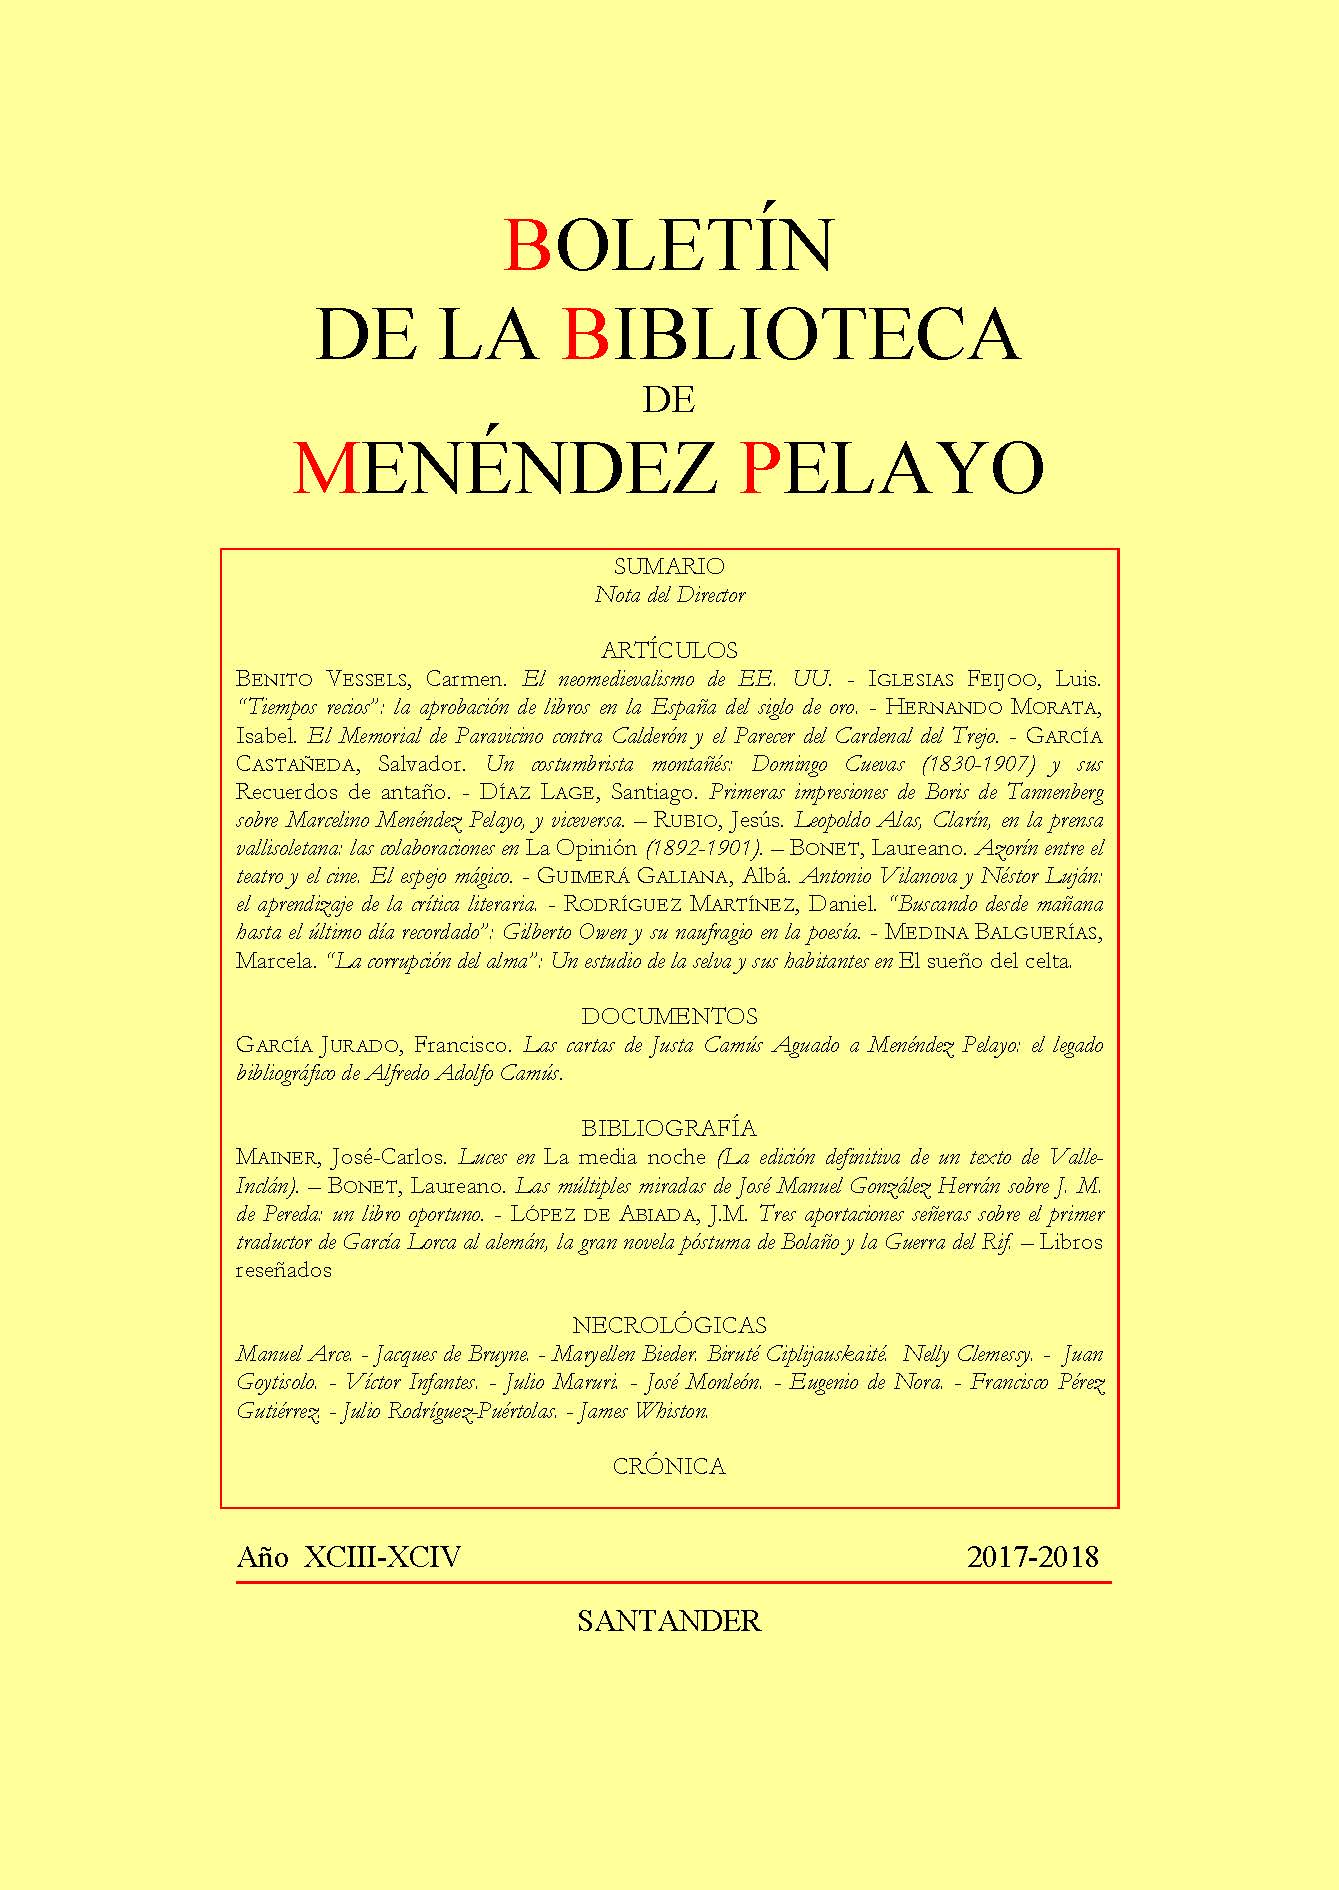 					Ver Vol. 9394 Núm. doble (2018): Boletín de la Biblioteca de Menéndez Pelayo. XCIII-XCIV (2017-2018)
				